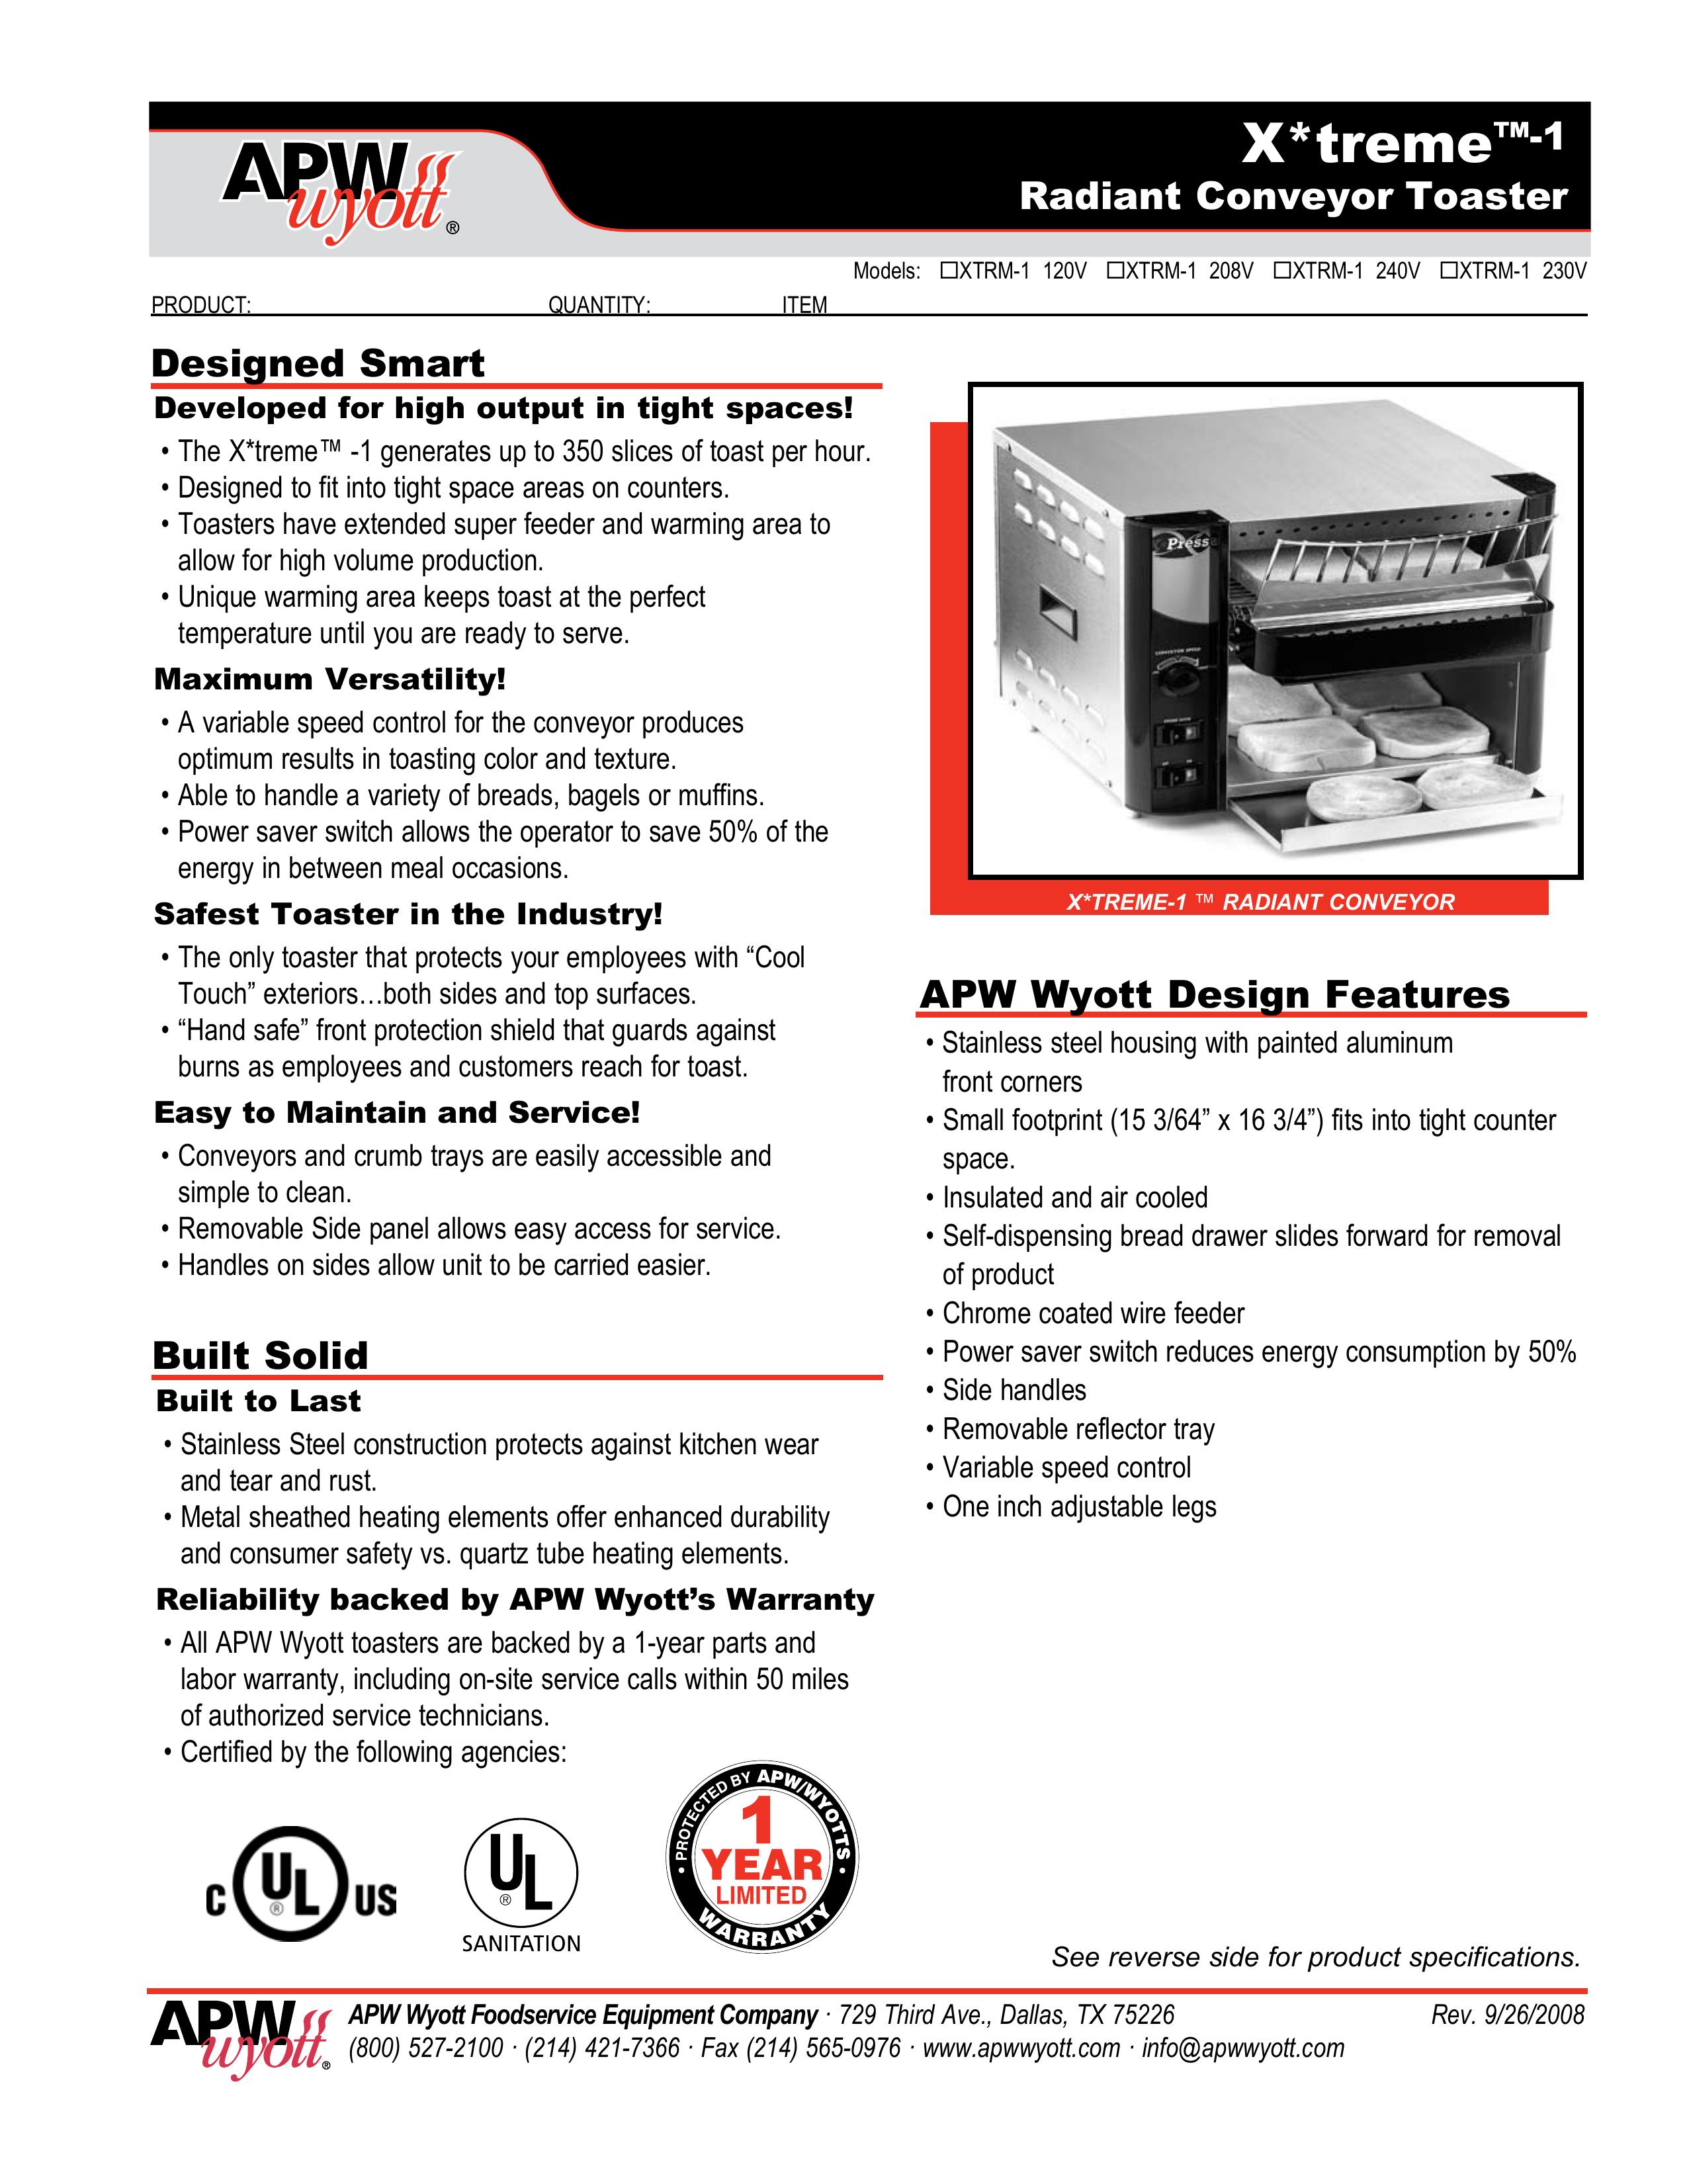 APW Wyott XTRM-1 240V Toaster User Manual